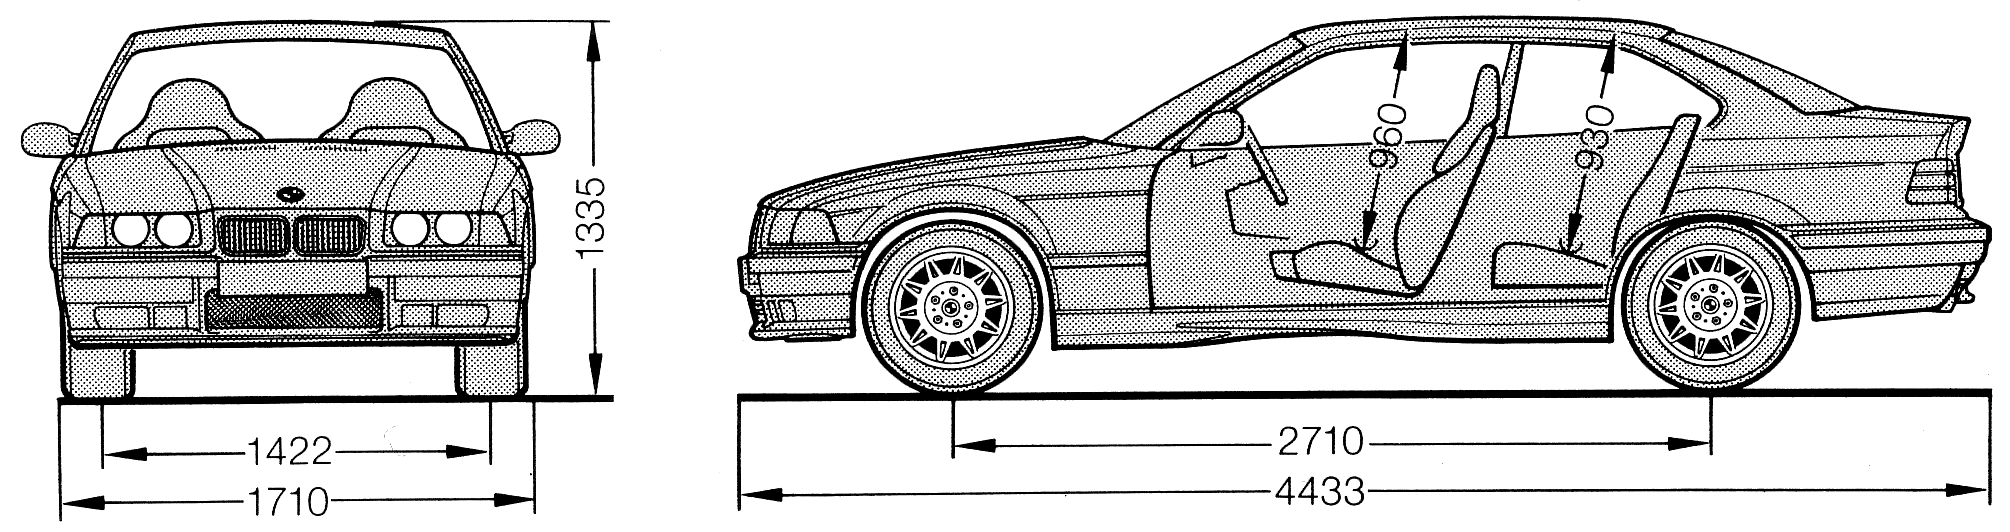 Bmw e36 coupe blueprints